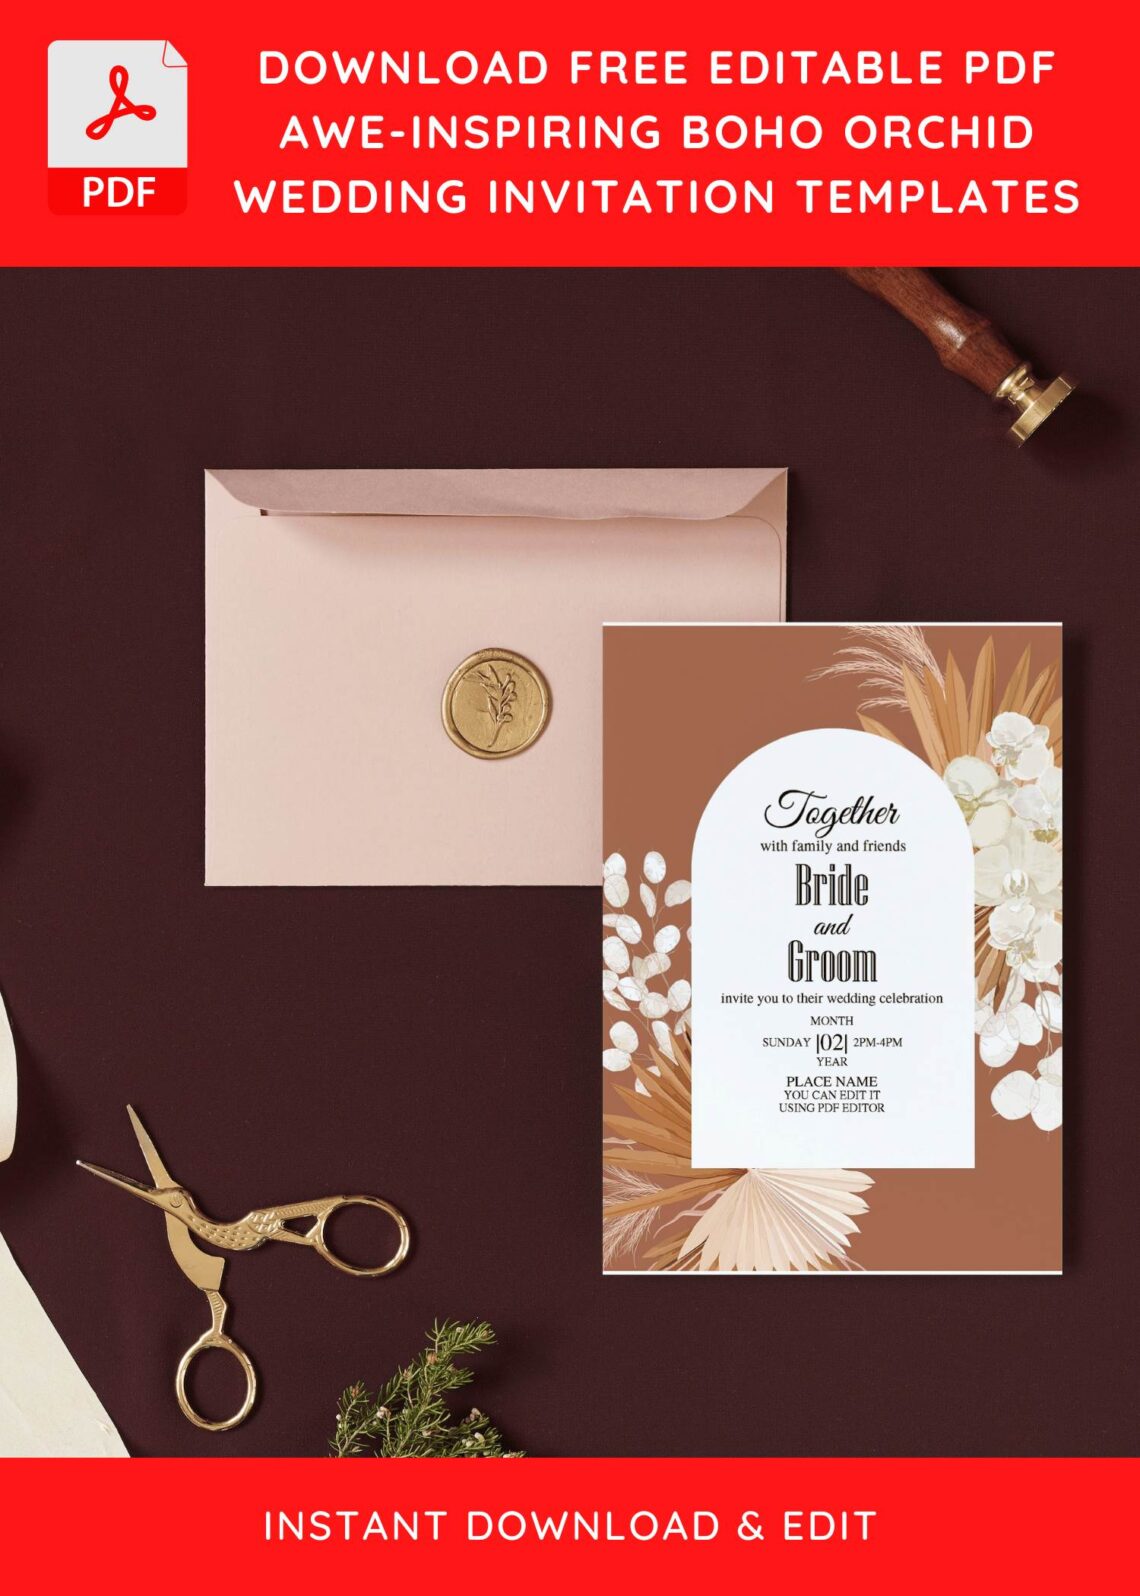 (Free Editable PDF) Boho Orchid Floral Wedding Invitation Templates I